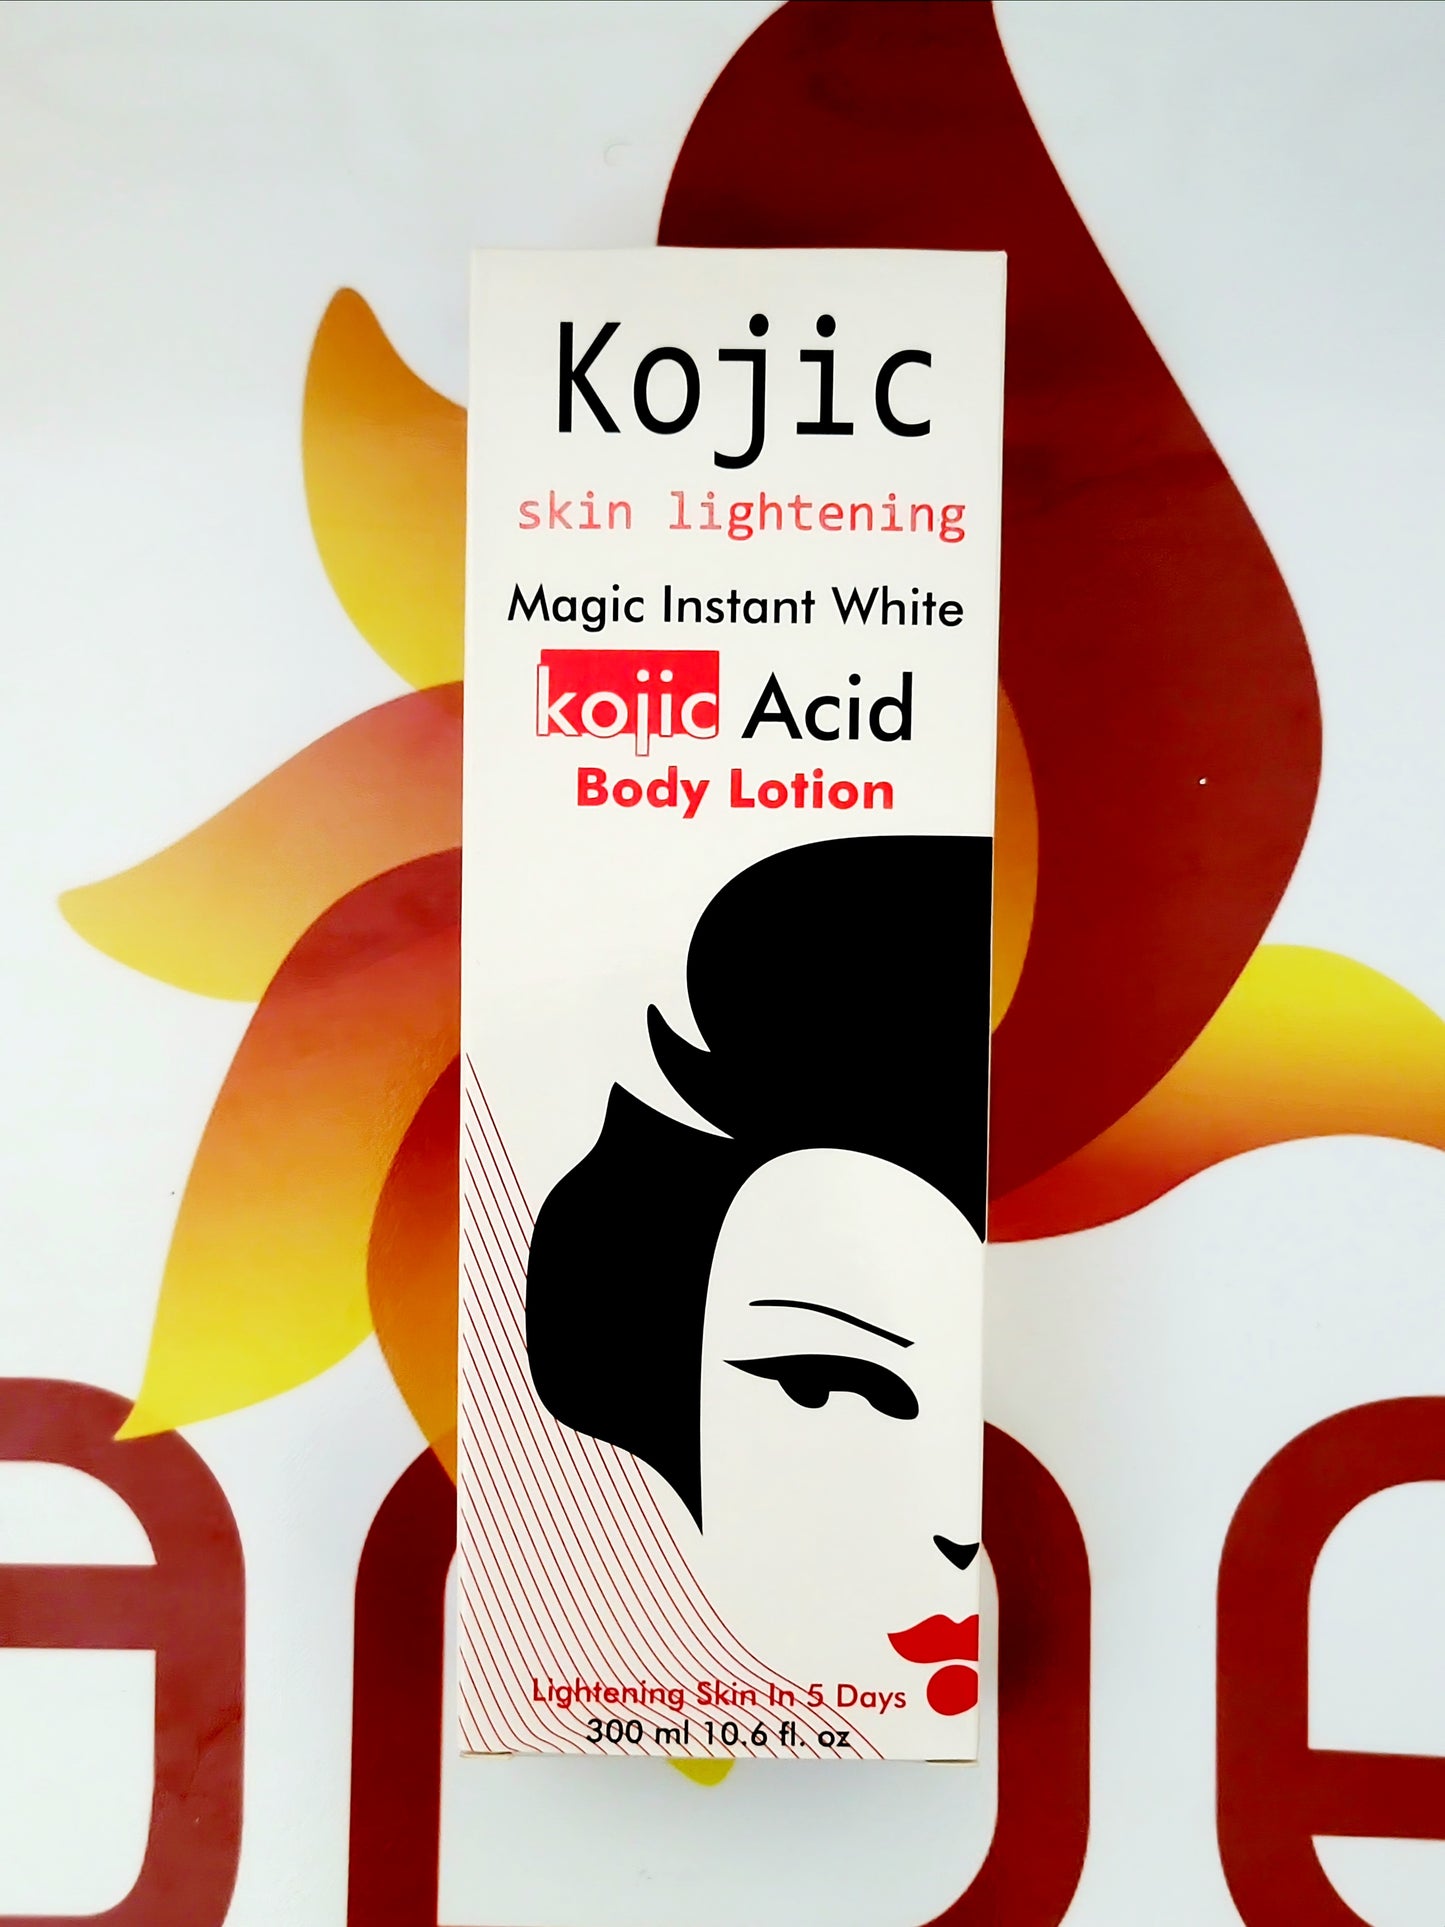 Kojic Skin Lightening Magic Instant White Body Lotion 300ml